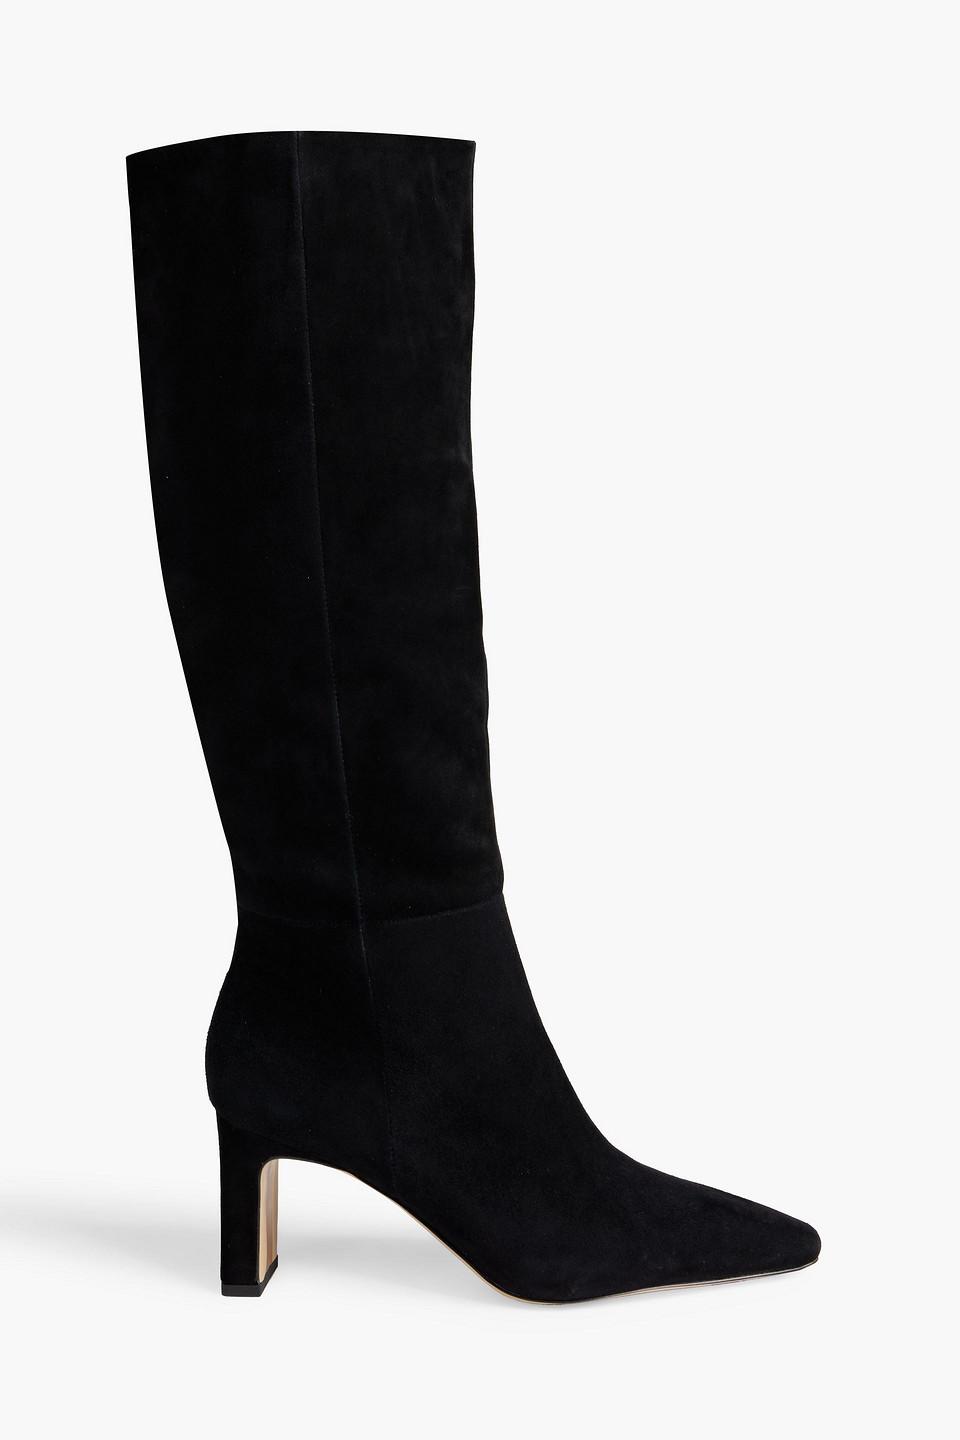 Sam Edelman Sylvia Suede Knee Boots in Black | Lyst